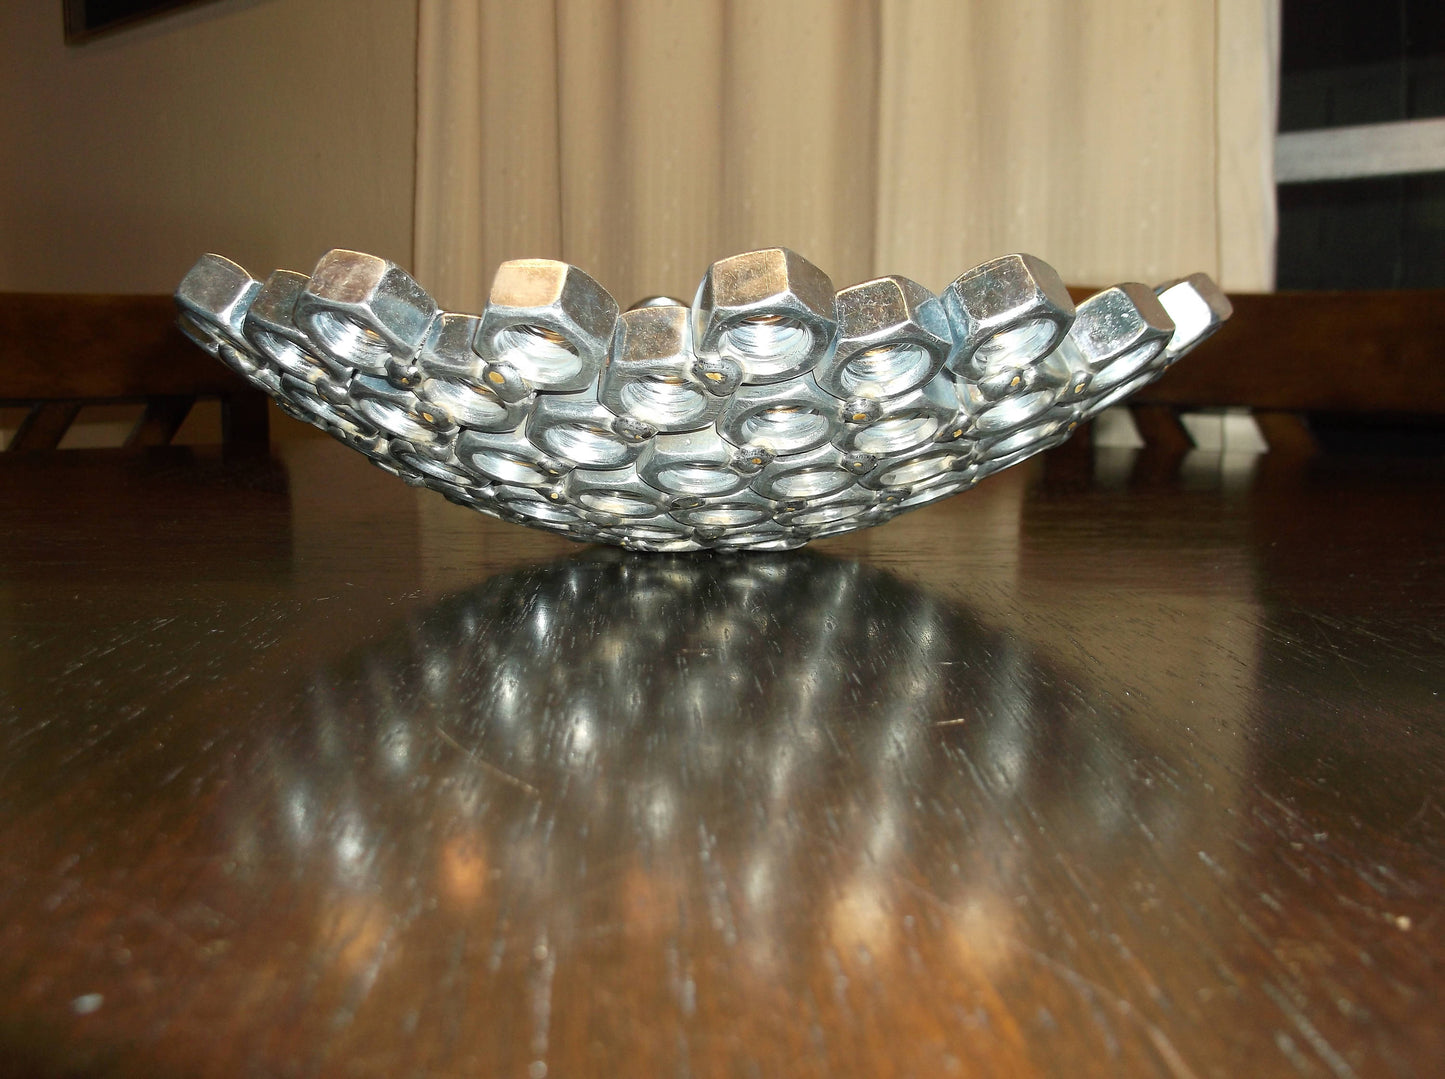 Fruit Bowl, Welded metal art